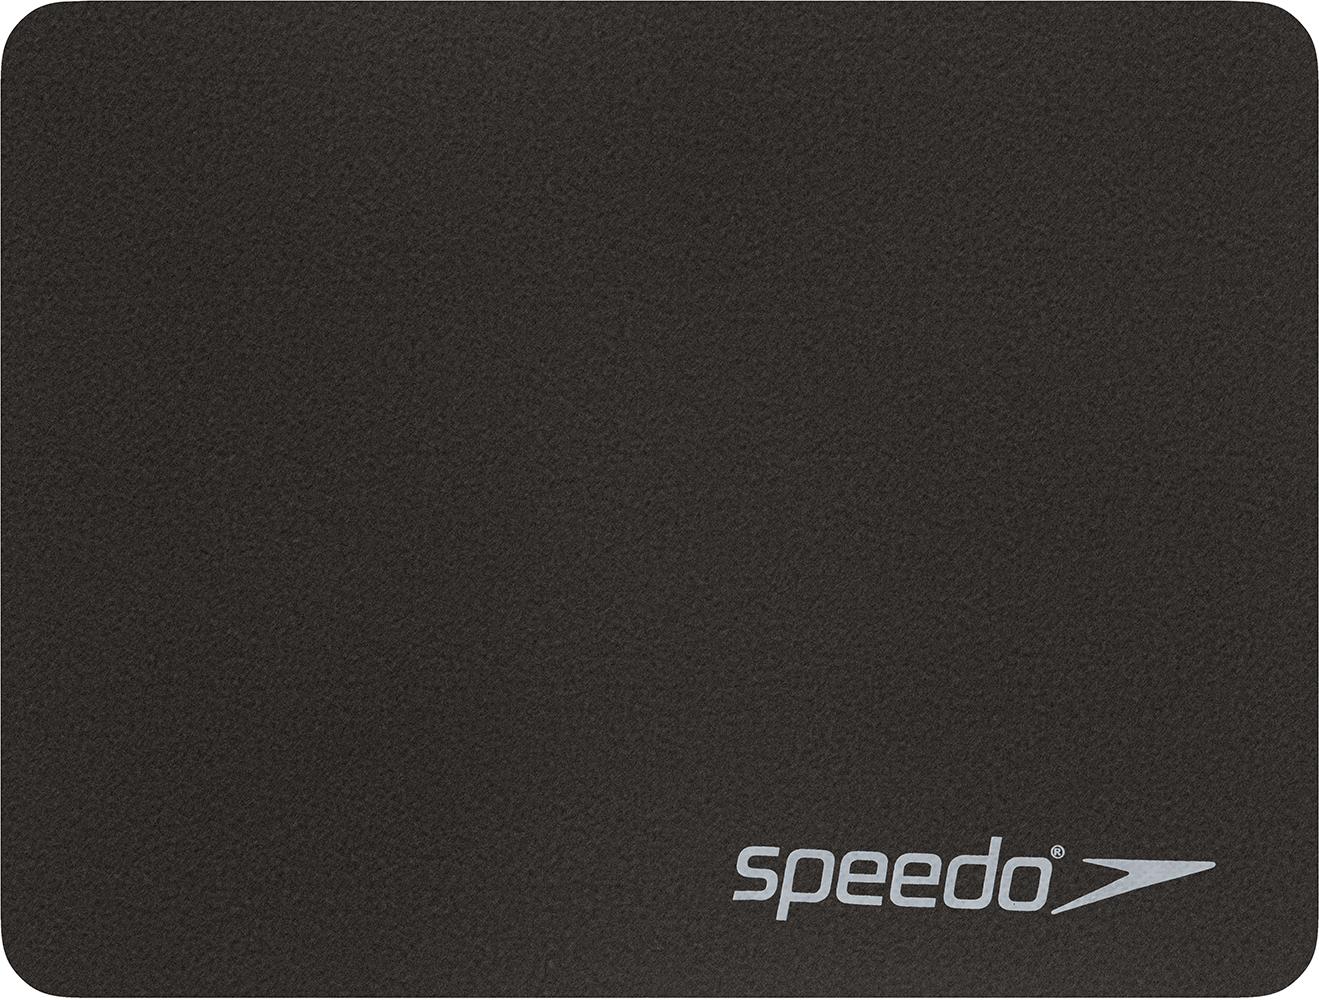 Speedo Sports Towel - Black